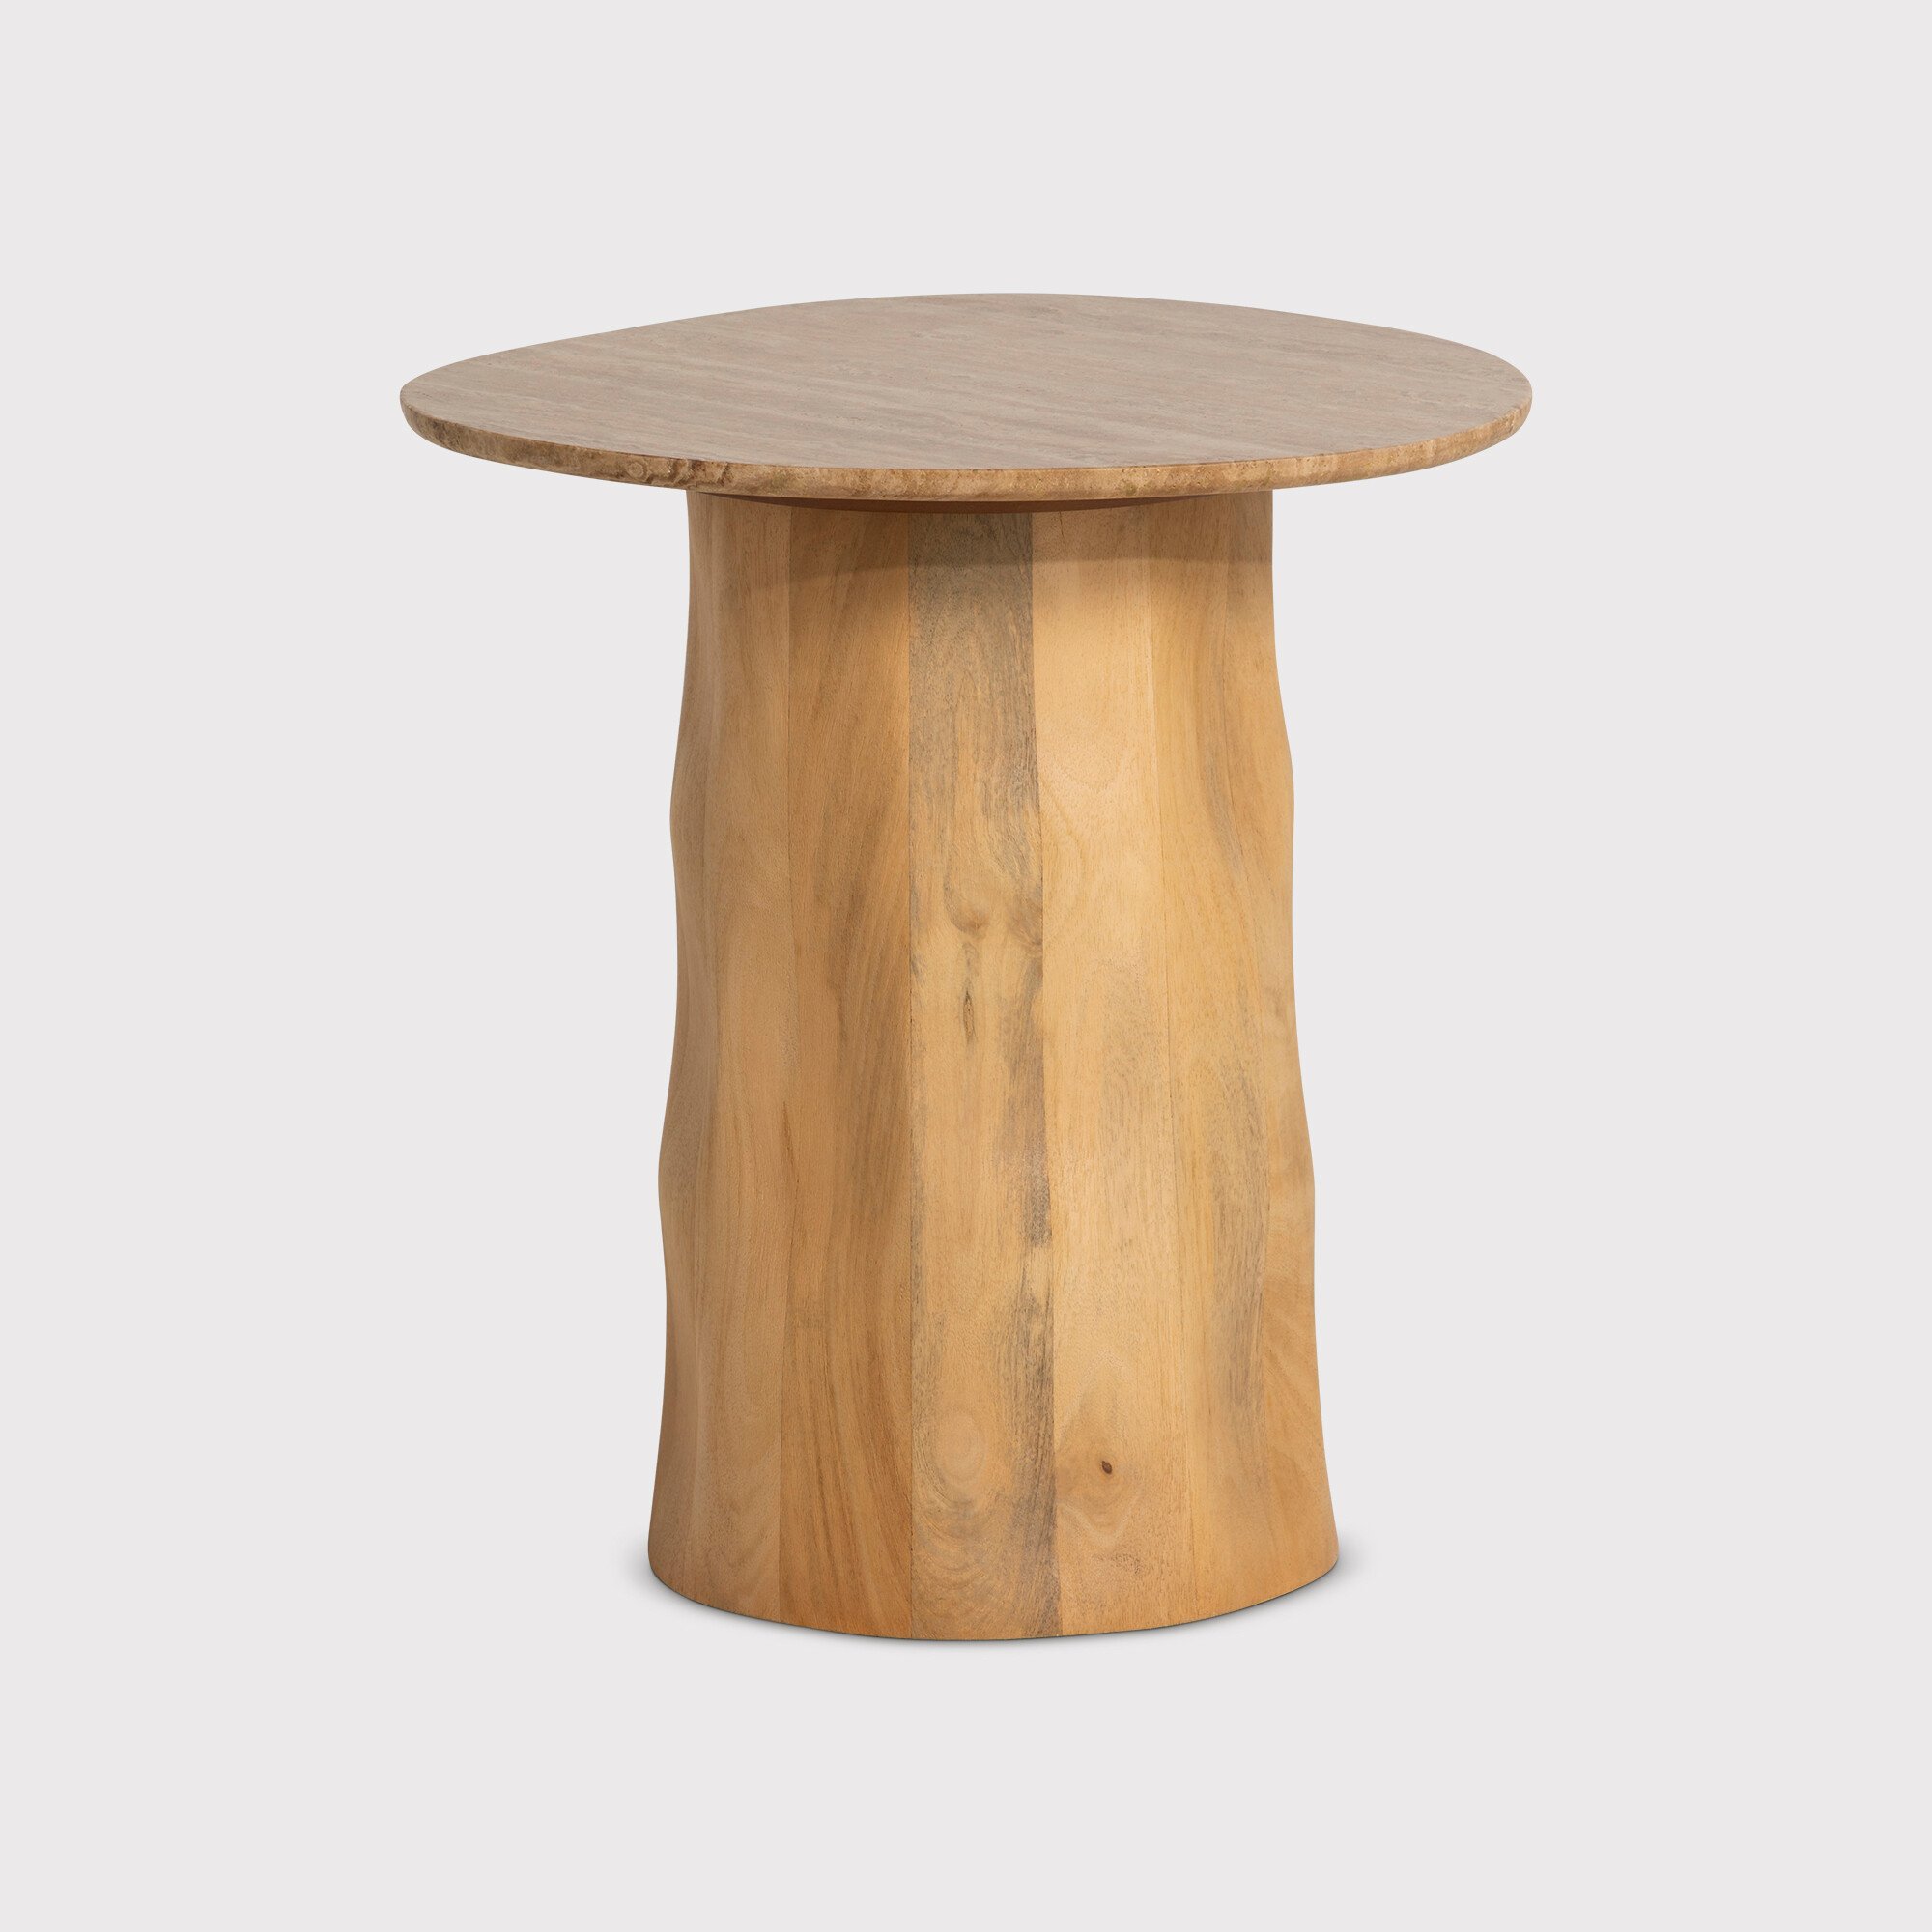 Rodin Organic Shape Side Table 45x40x50cm, Round, Neutral Wood | Barker & Stonehouse